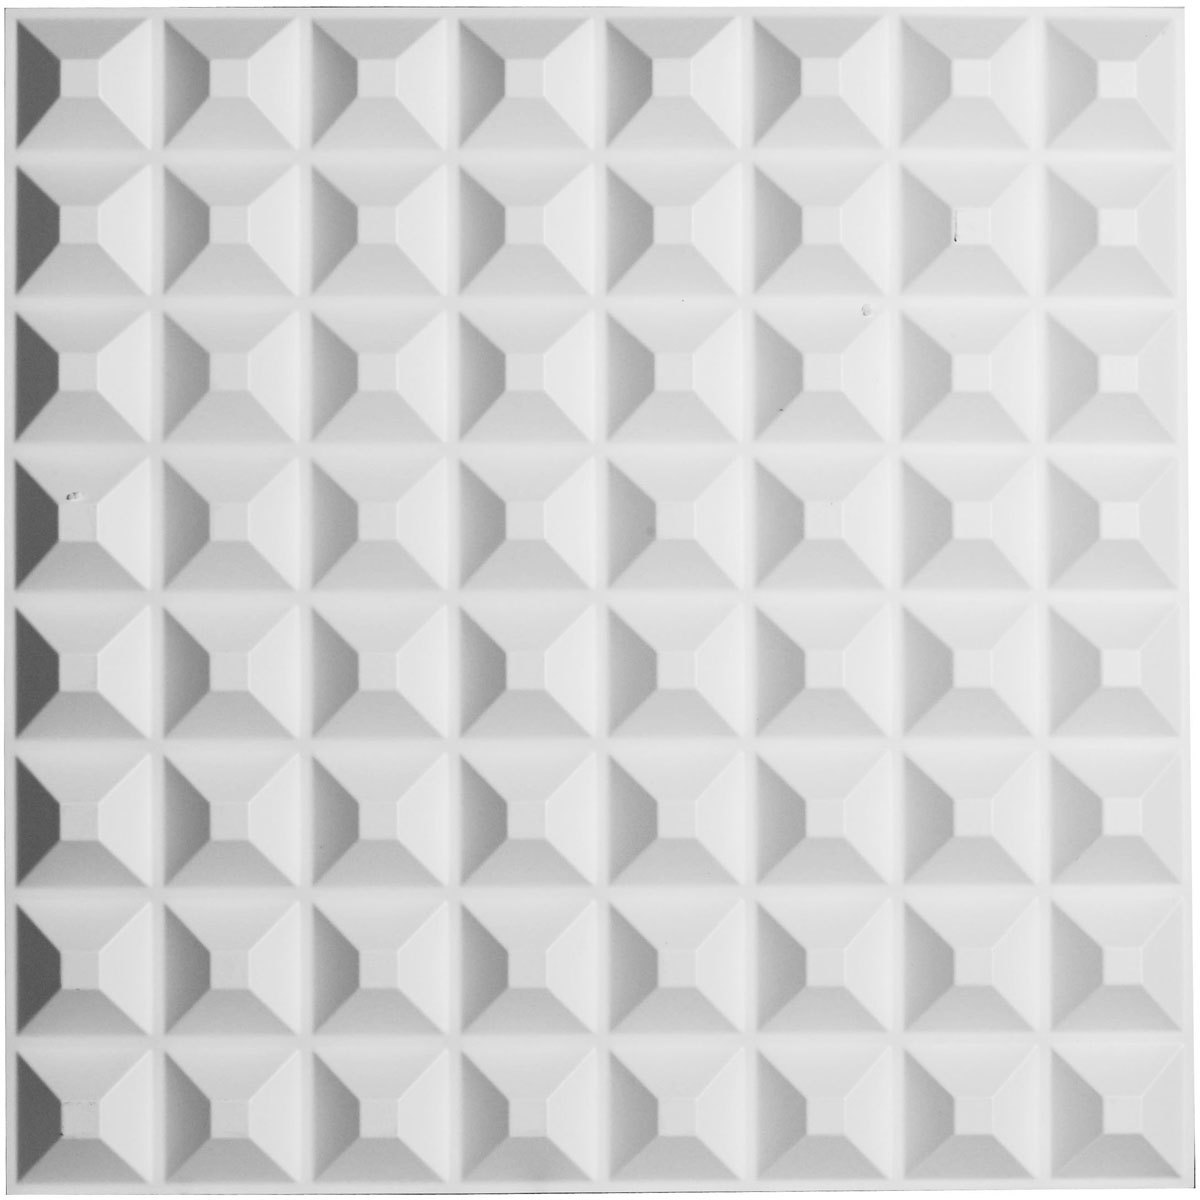 19 5/8"W x 19 5/8"H Bradford EnduraWall Decorative 3D Wall Panel, White - $10.50